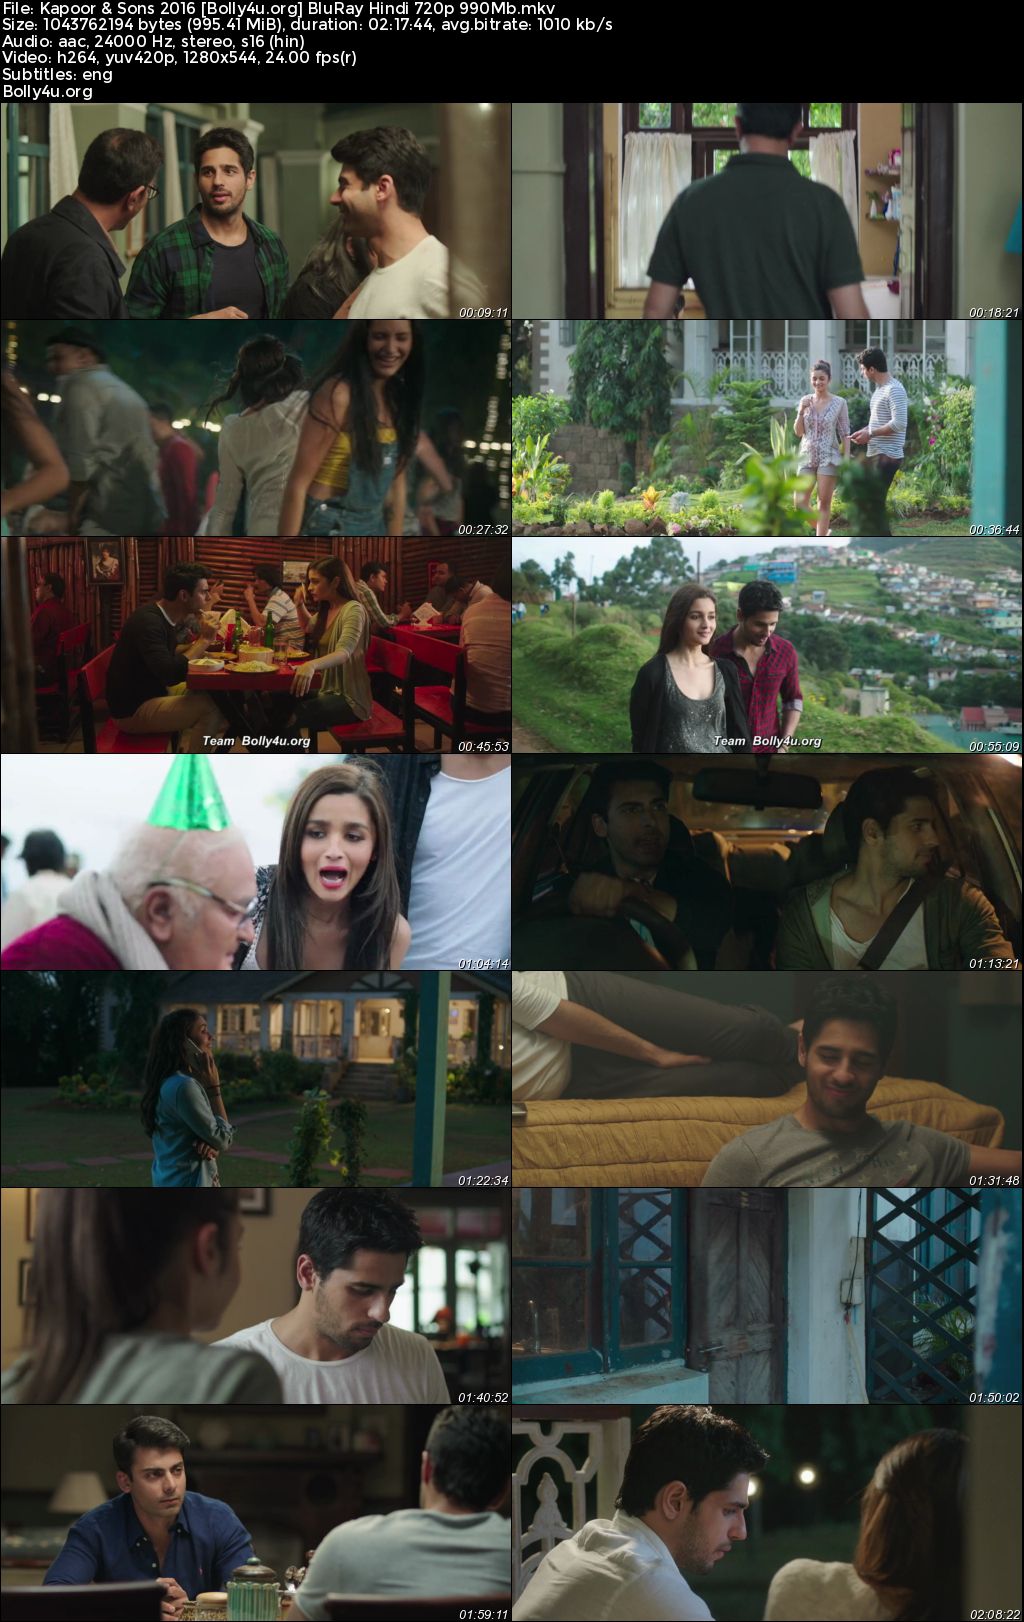 Kapoor and Sons 2016 BluRay Hindi Full Movie Download 1080p 720p 480p